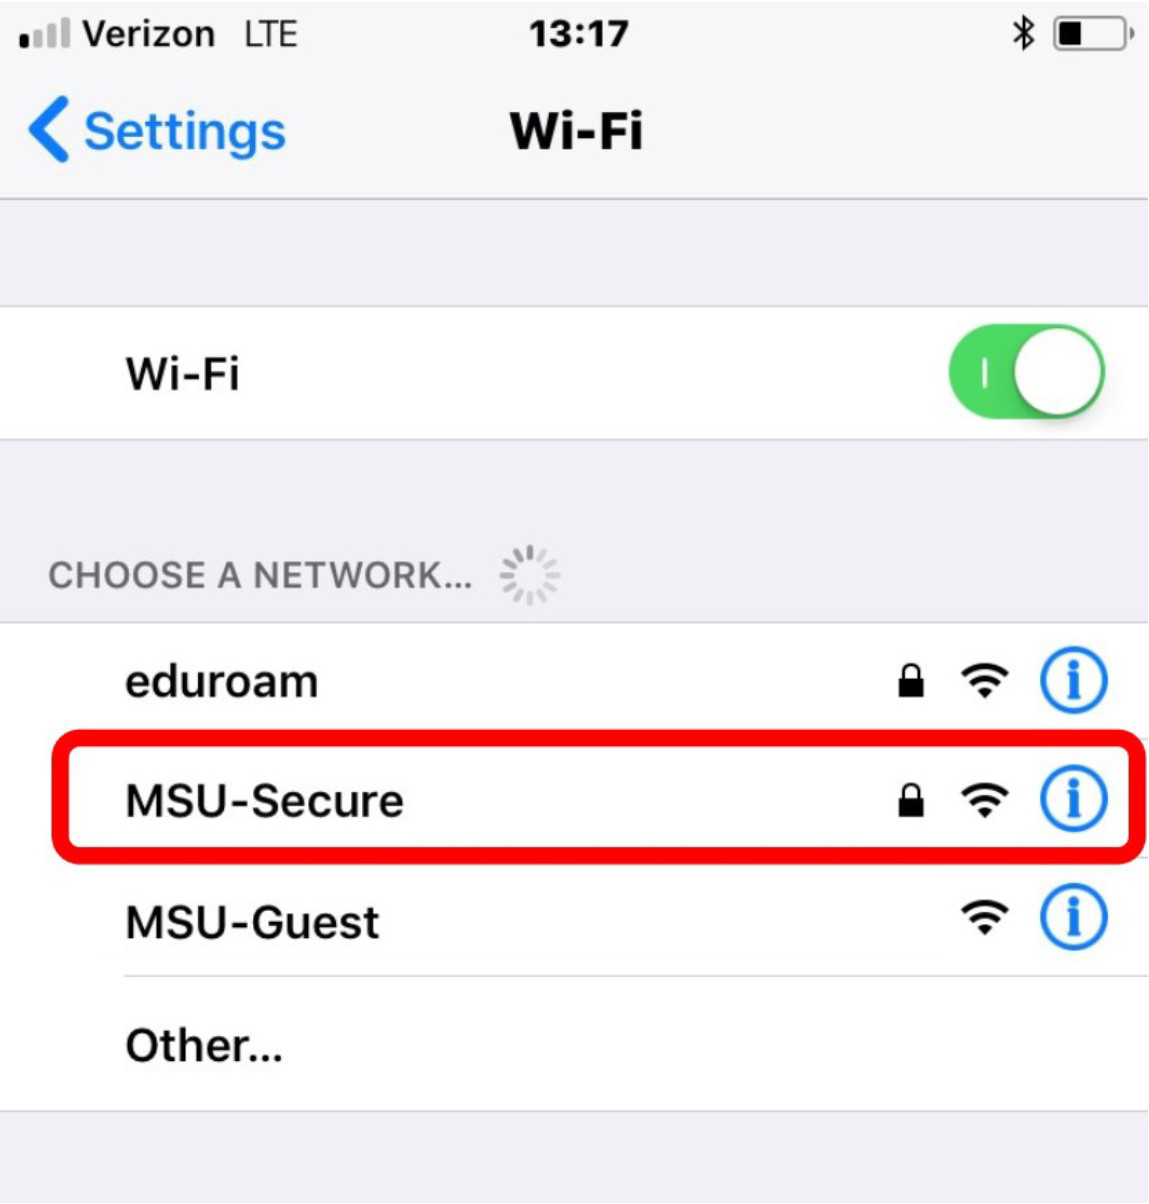 Select MSU-Secure screen shot.